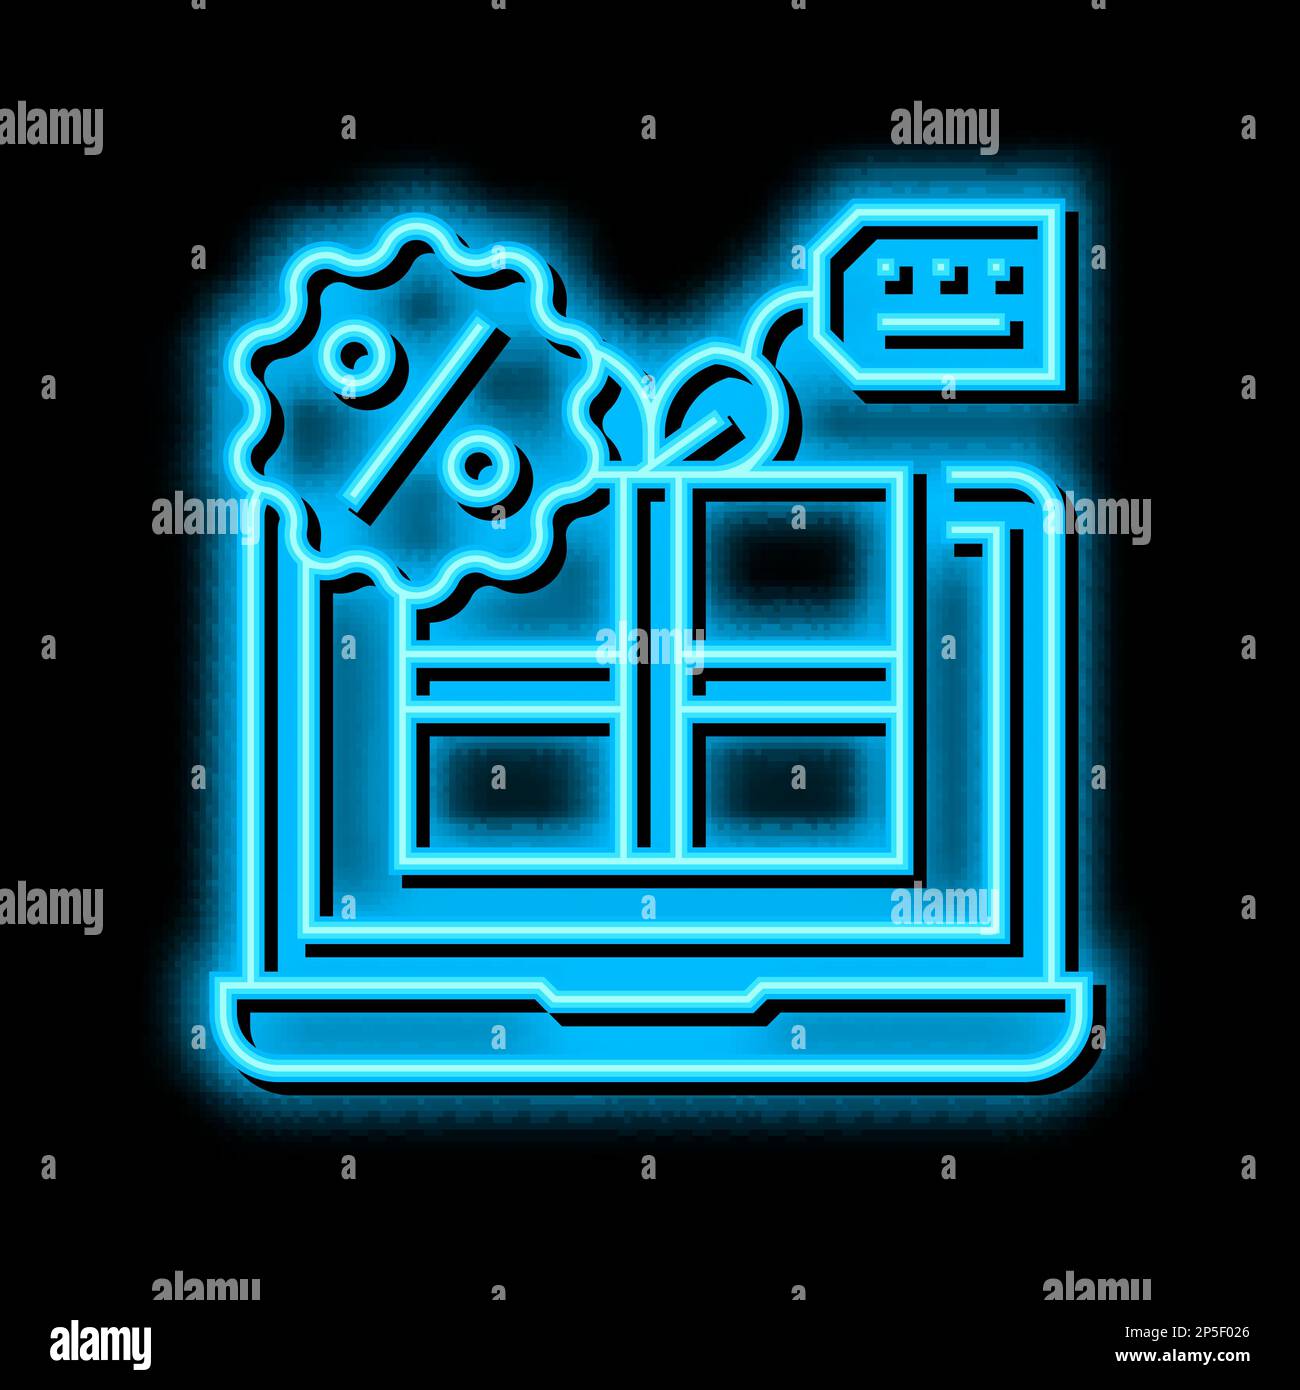 online discount neon glow icon illustration Stock Vector